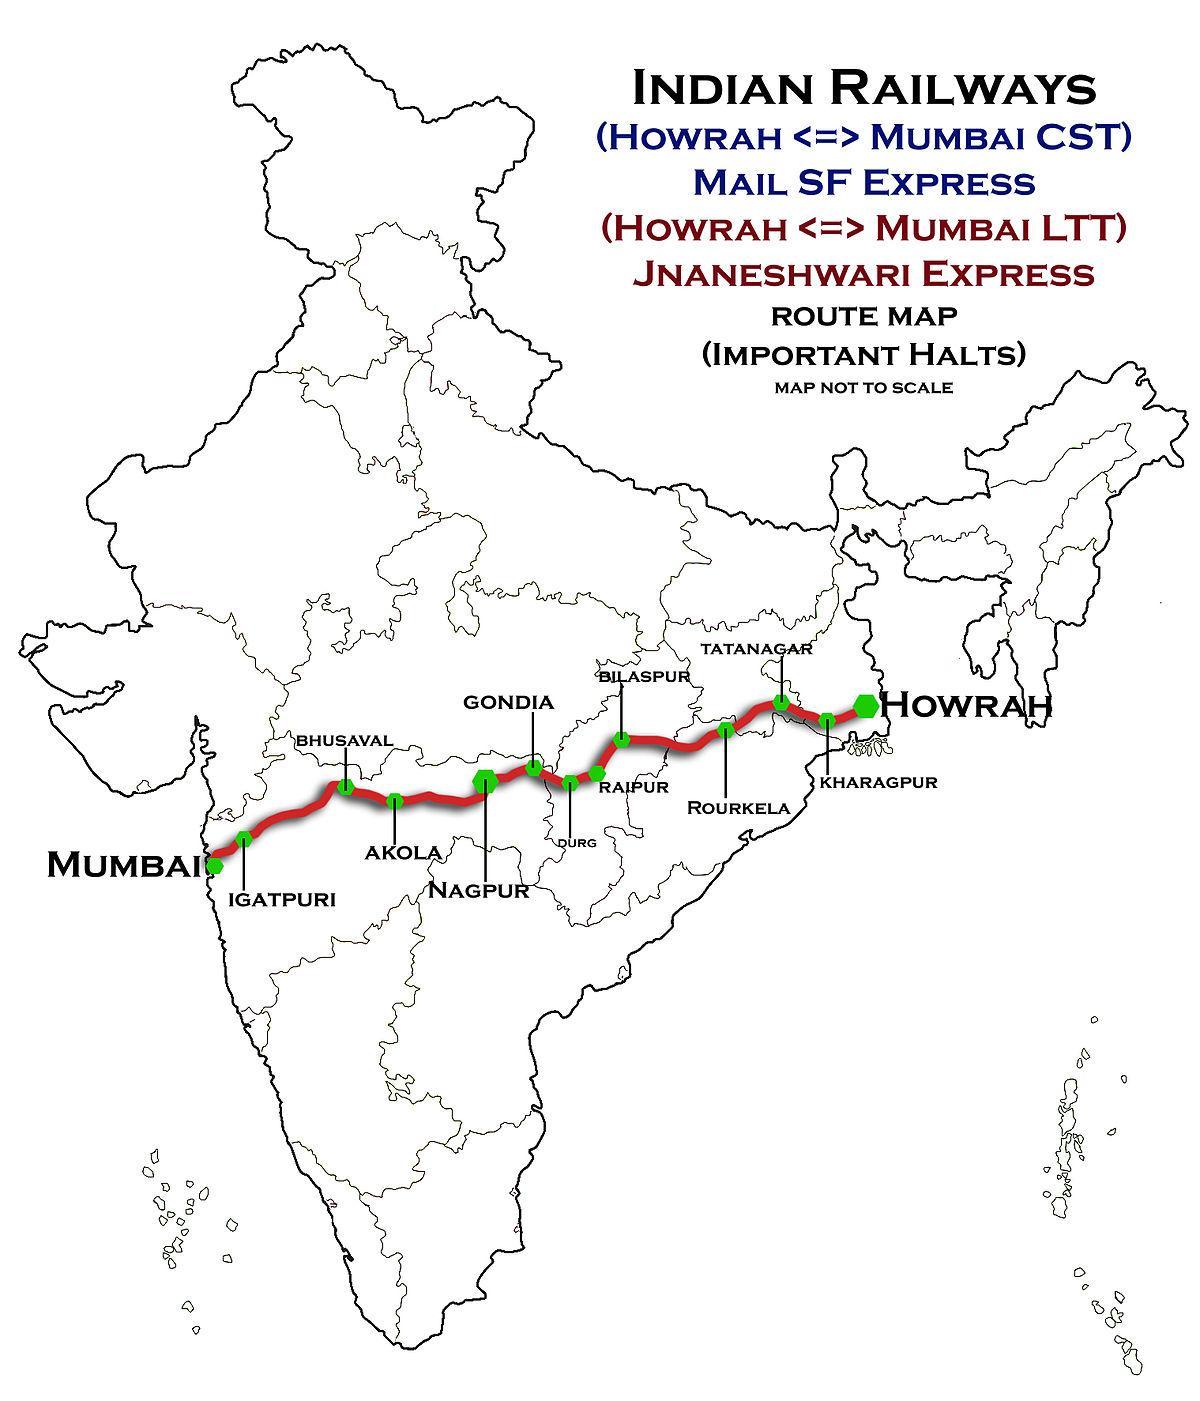 nagpur Mumbai express autostradës hartë